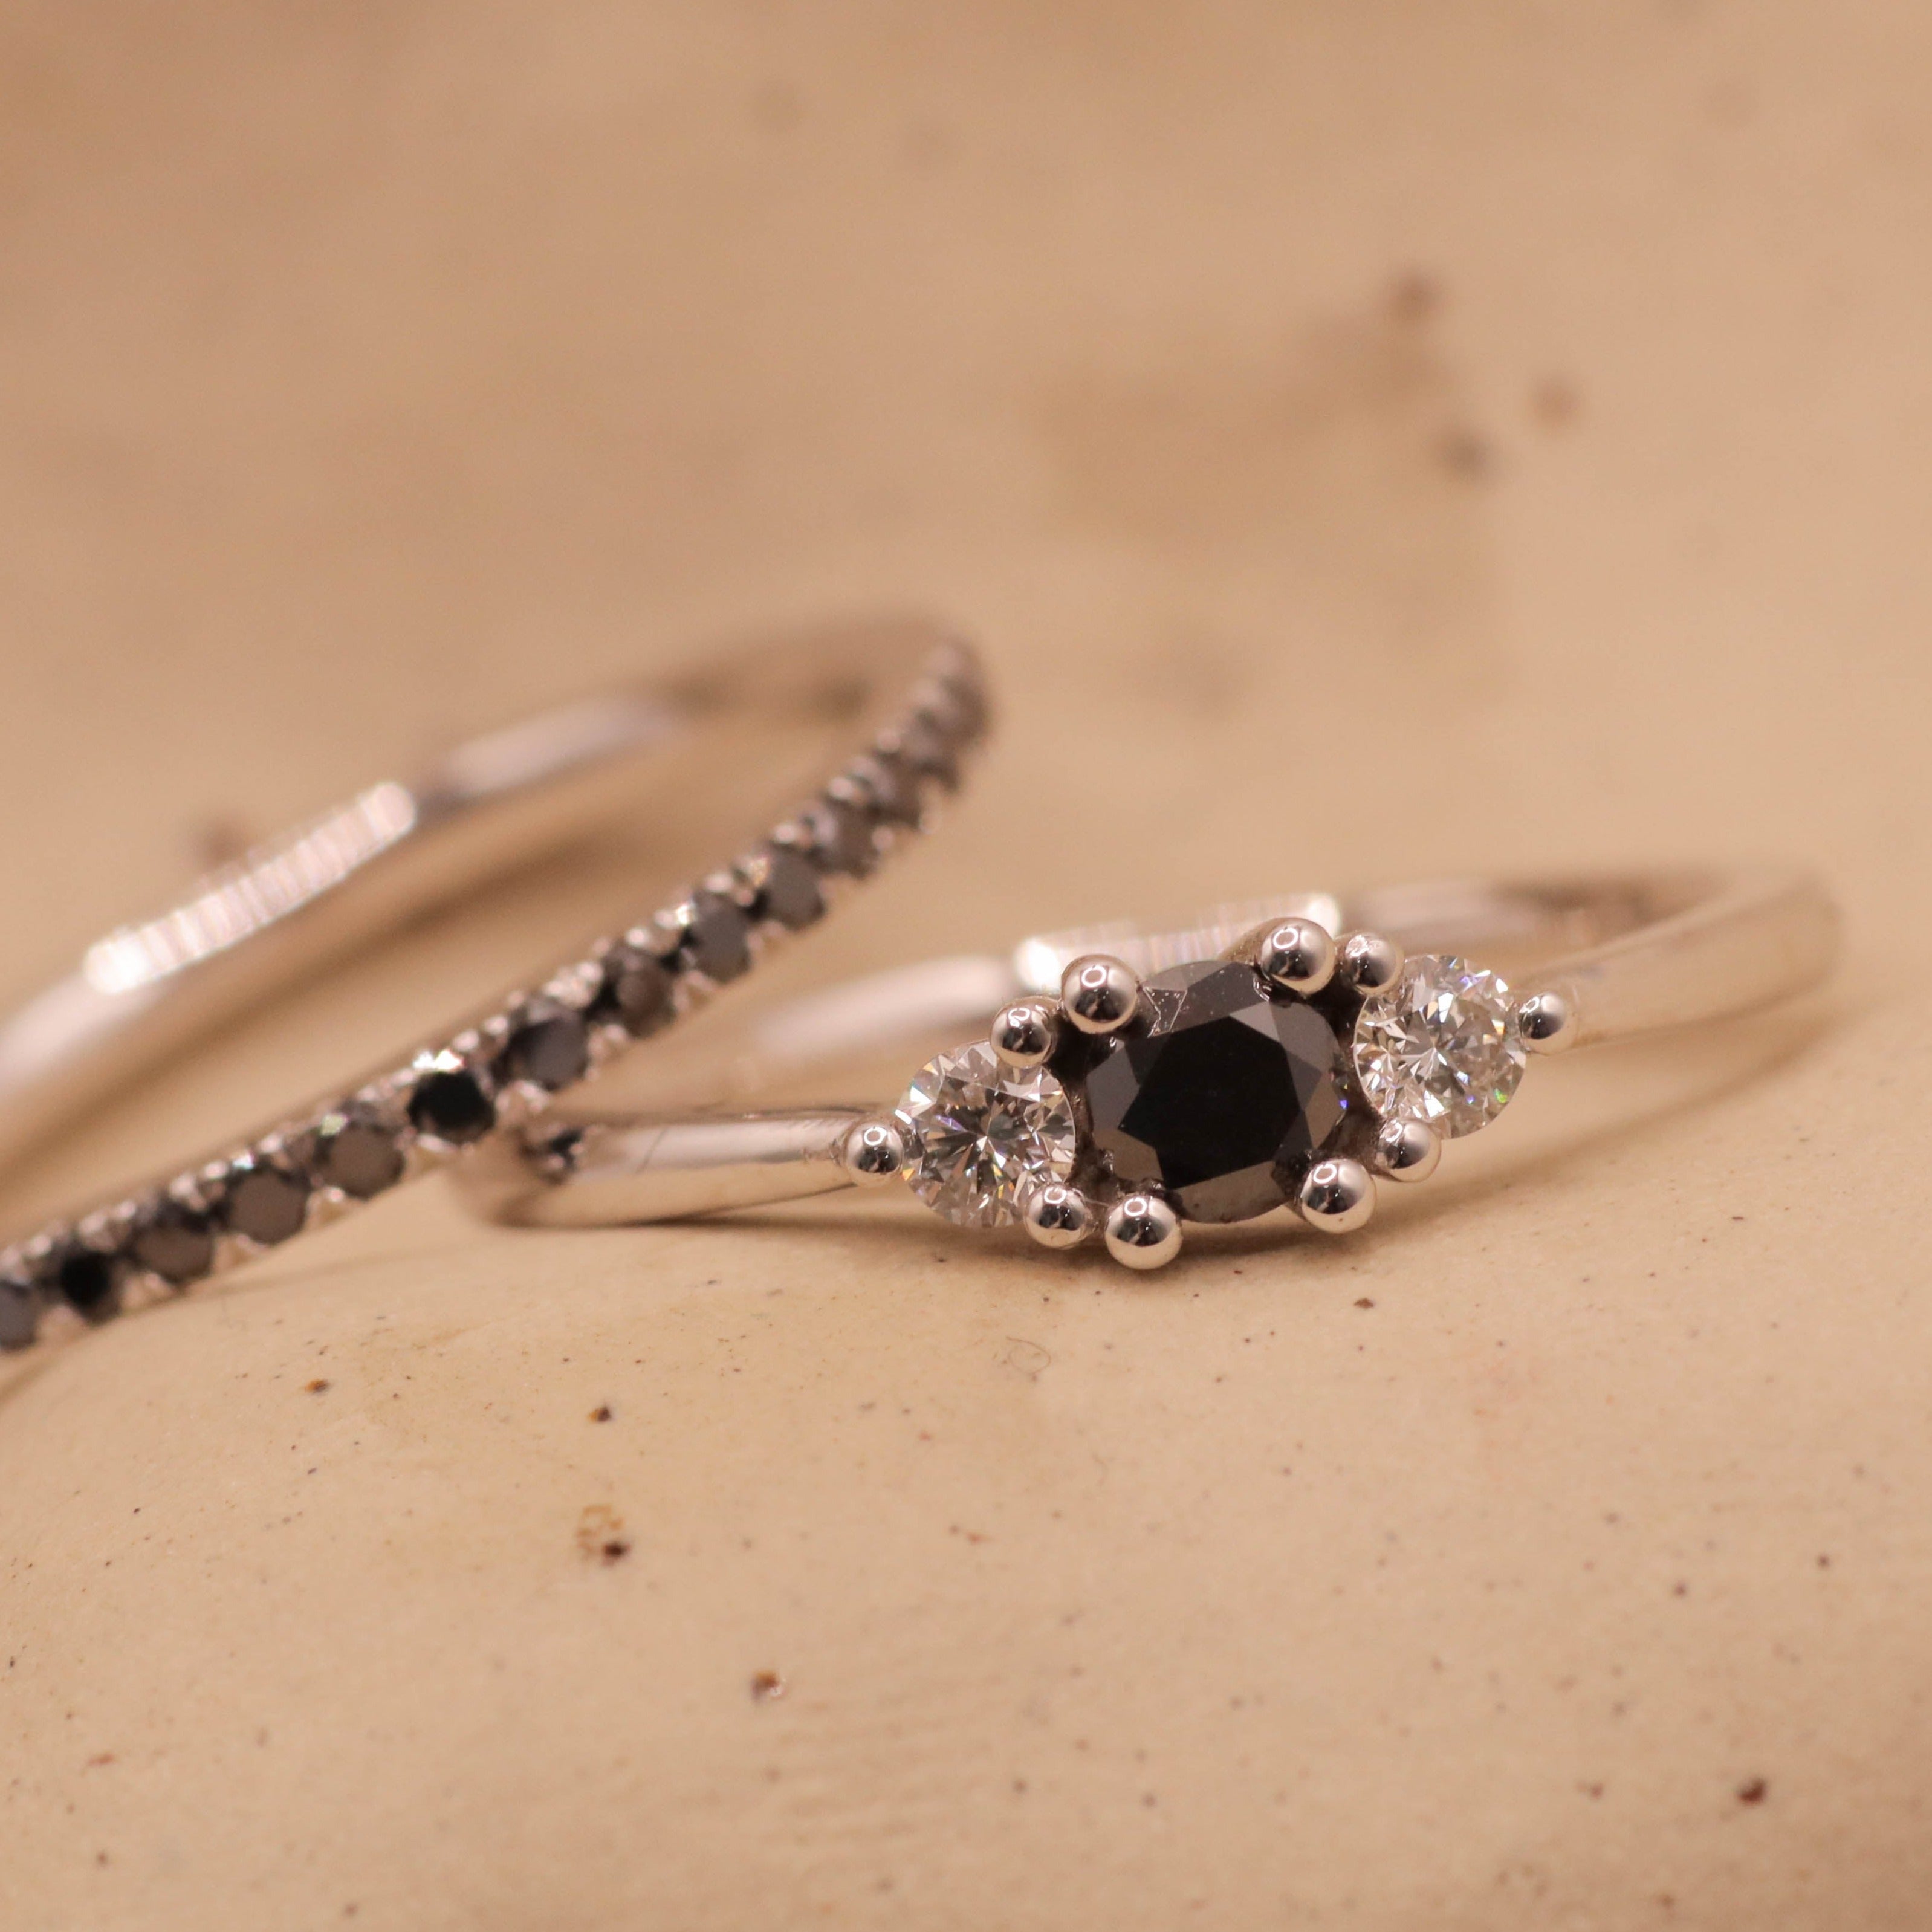 Audrey Ring White & Black 3.5mm Diamonds